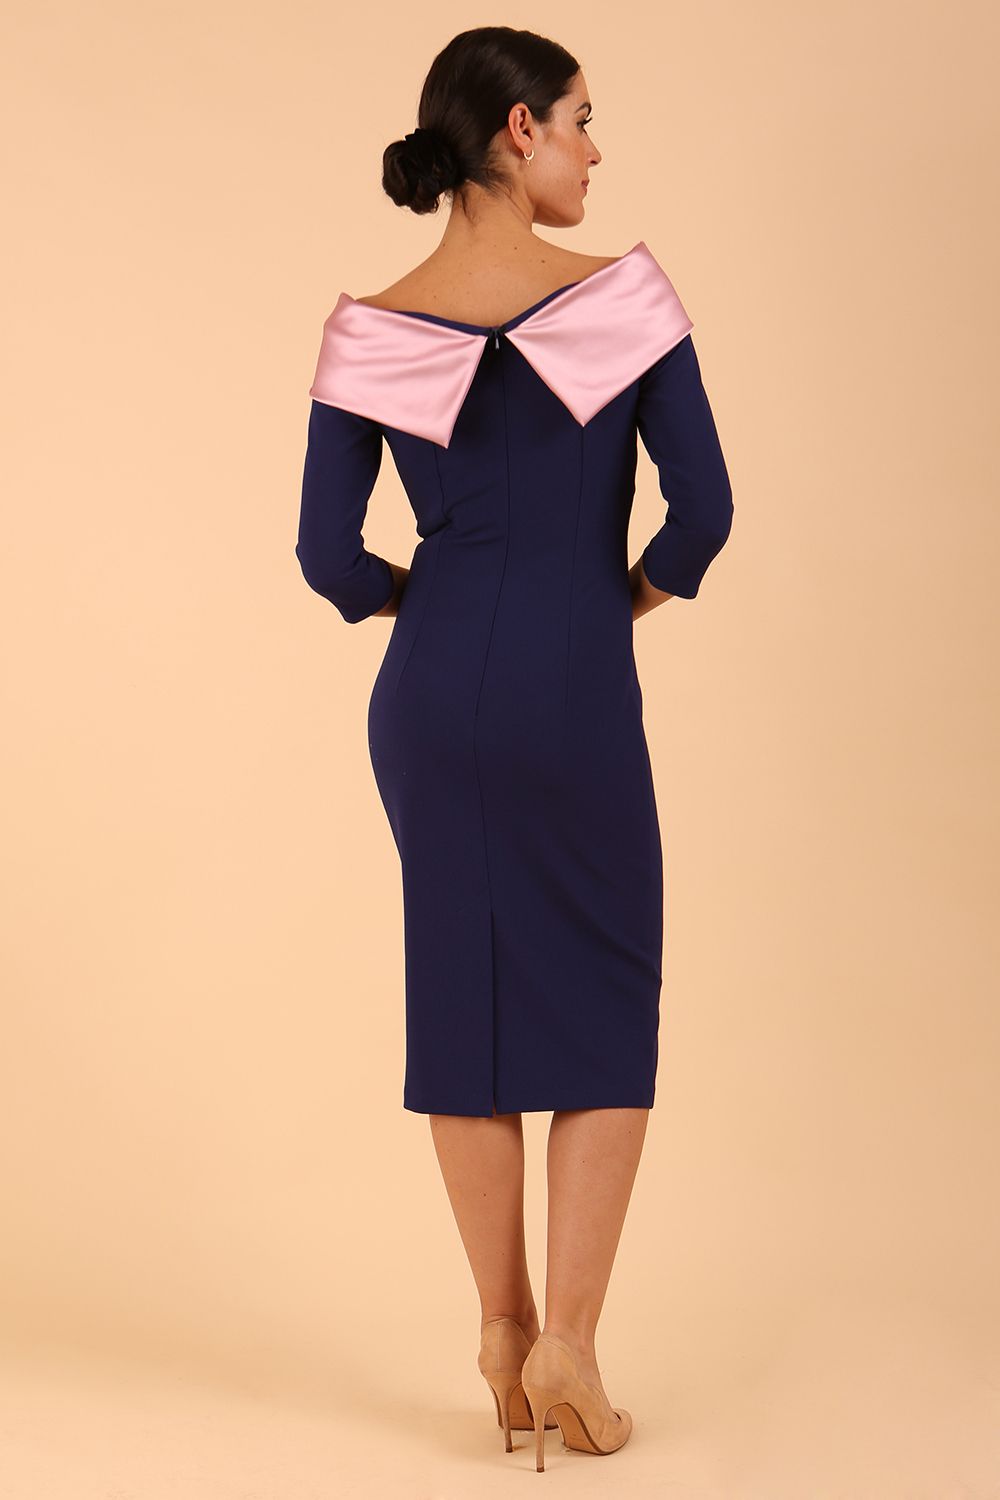 Model wearing a Rosalind Off Shoulder Bow Detail Pencil Dress 3/4 sleeve in Navy Blue/ Pink contrast